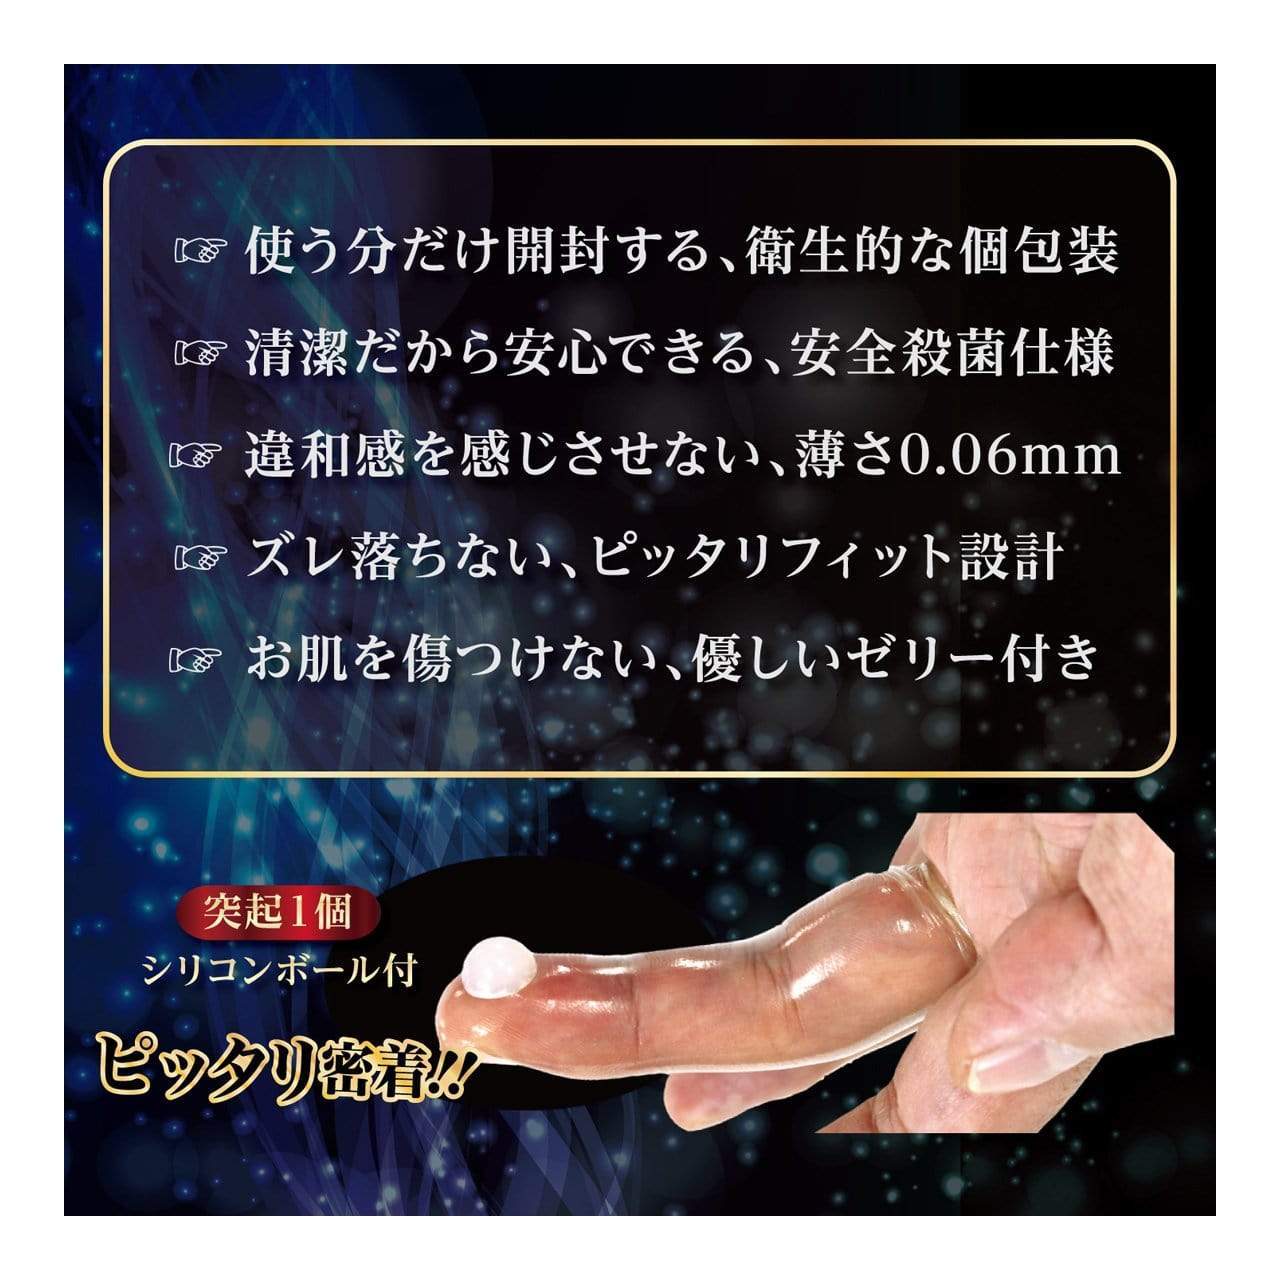 Kiss Me Love - Finger Skin DX G1Finger Sleeves 6 Pieces (Clear) Novelties (Non Vibration) 4560444118144 CherryAffairs